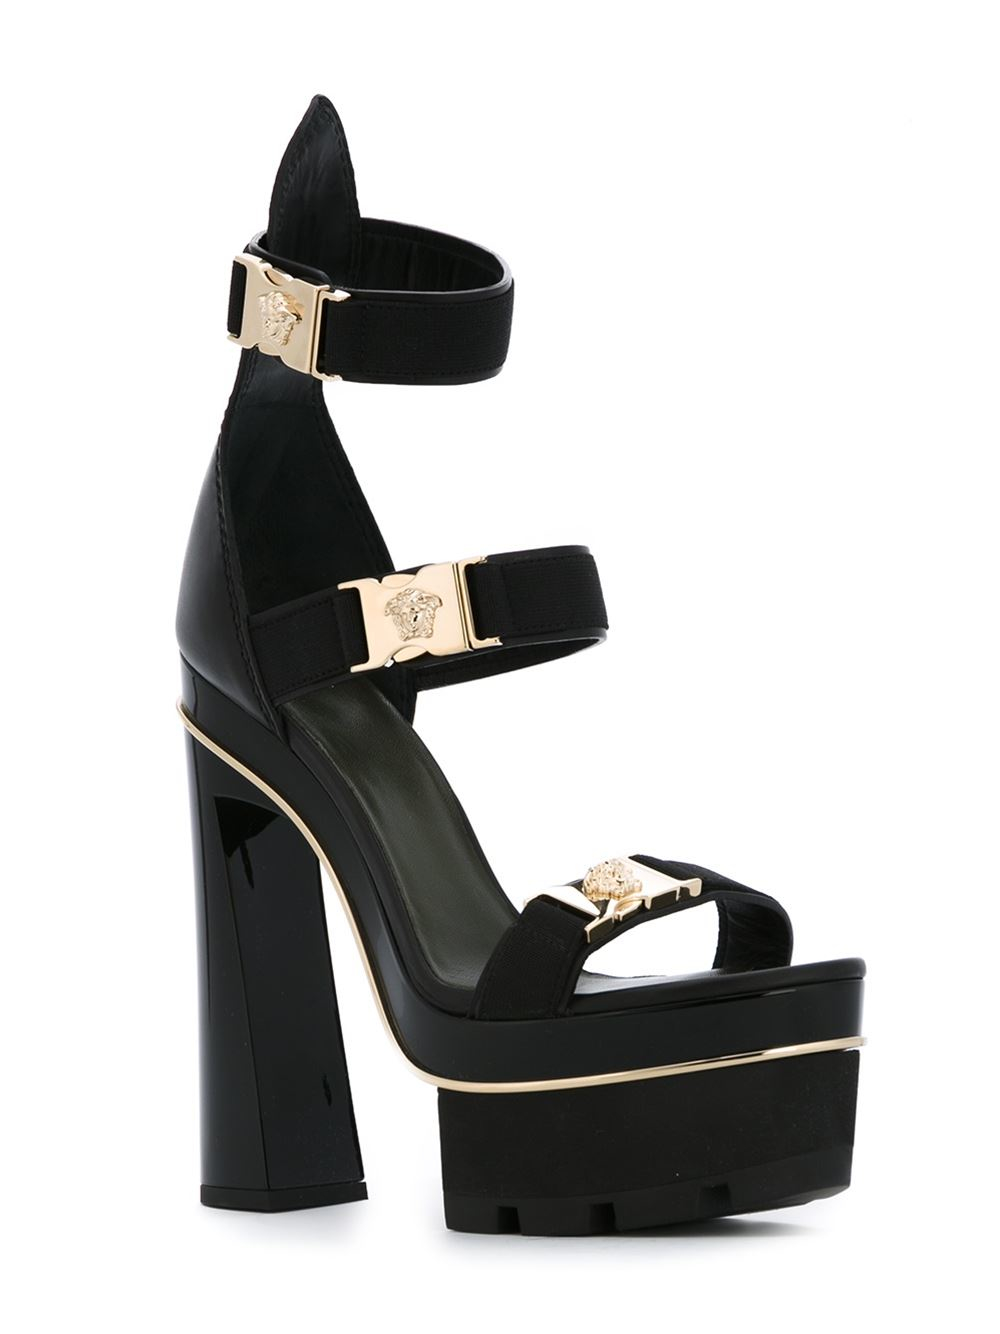 Lyst - Versace 'medusa Tri-strap' Platform Sandals in Black